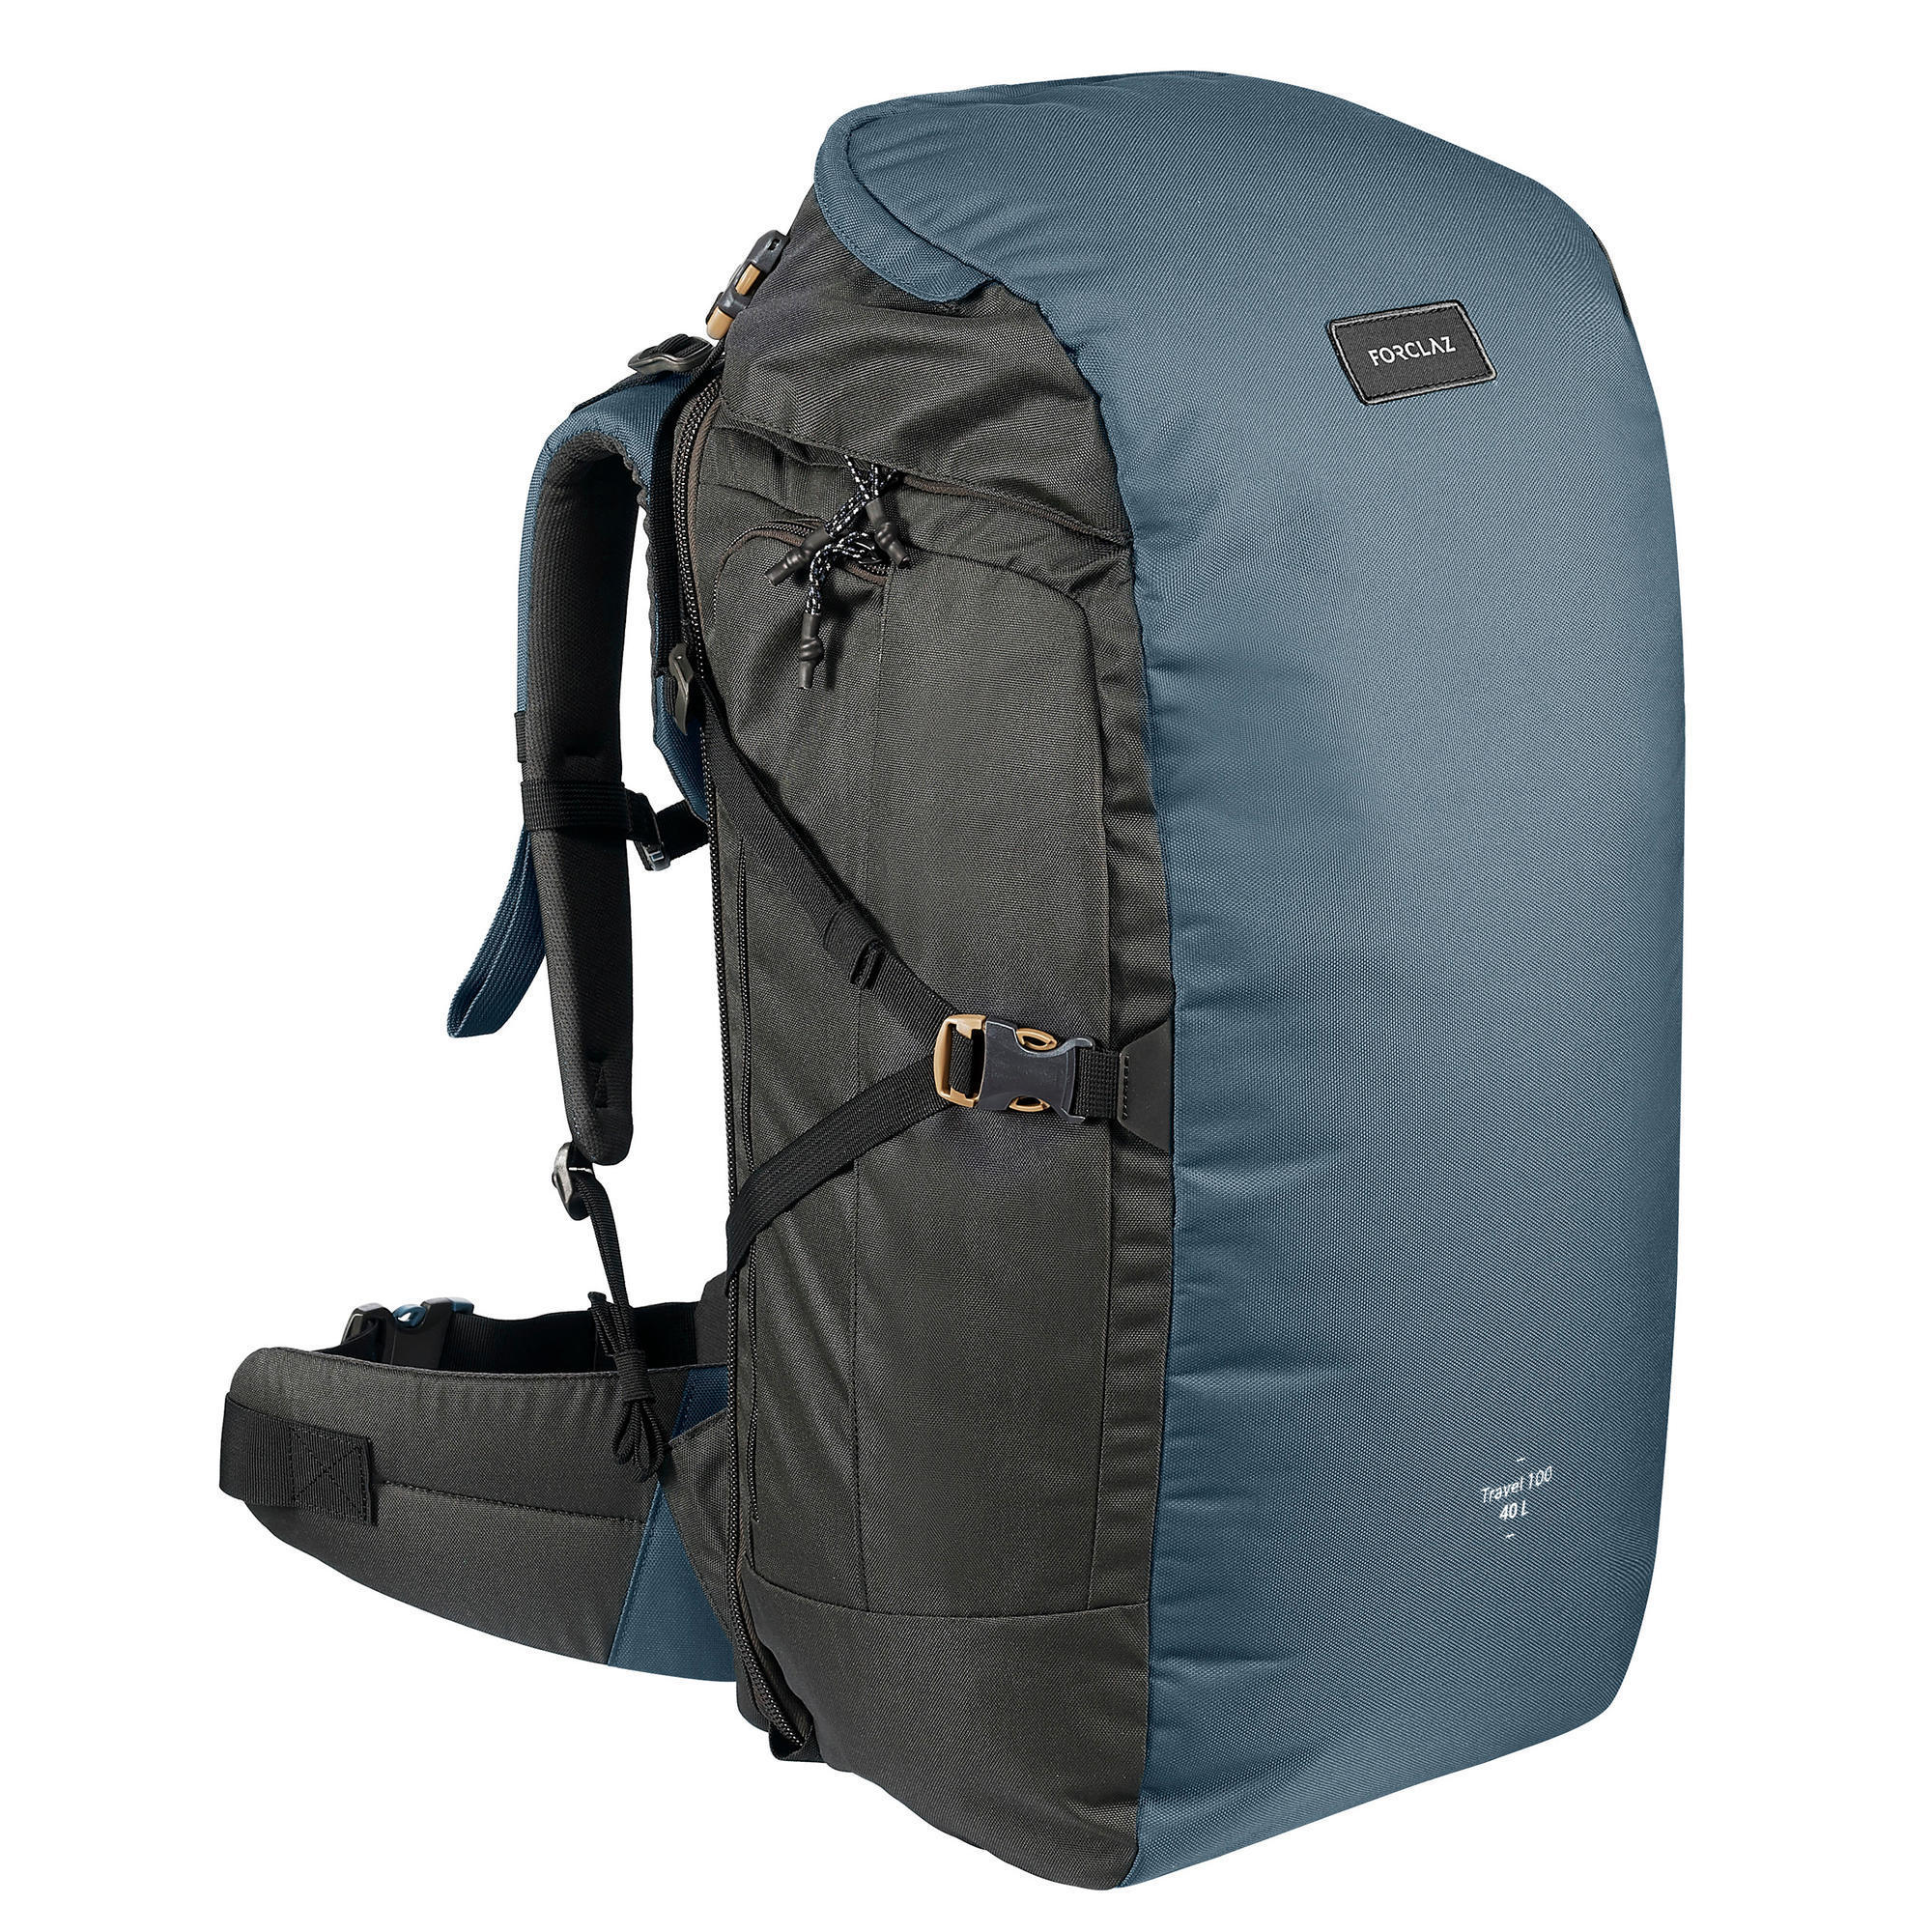 40 liter travel backpack